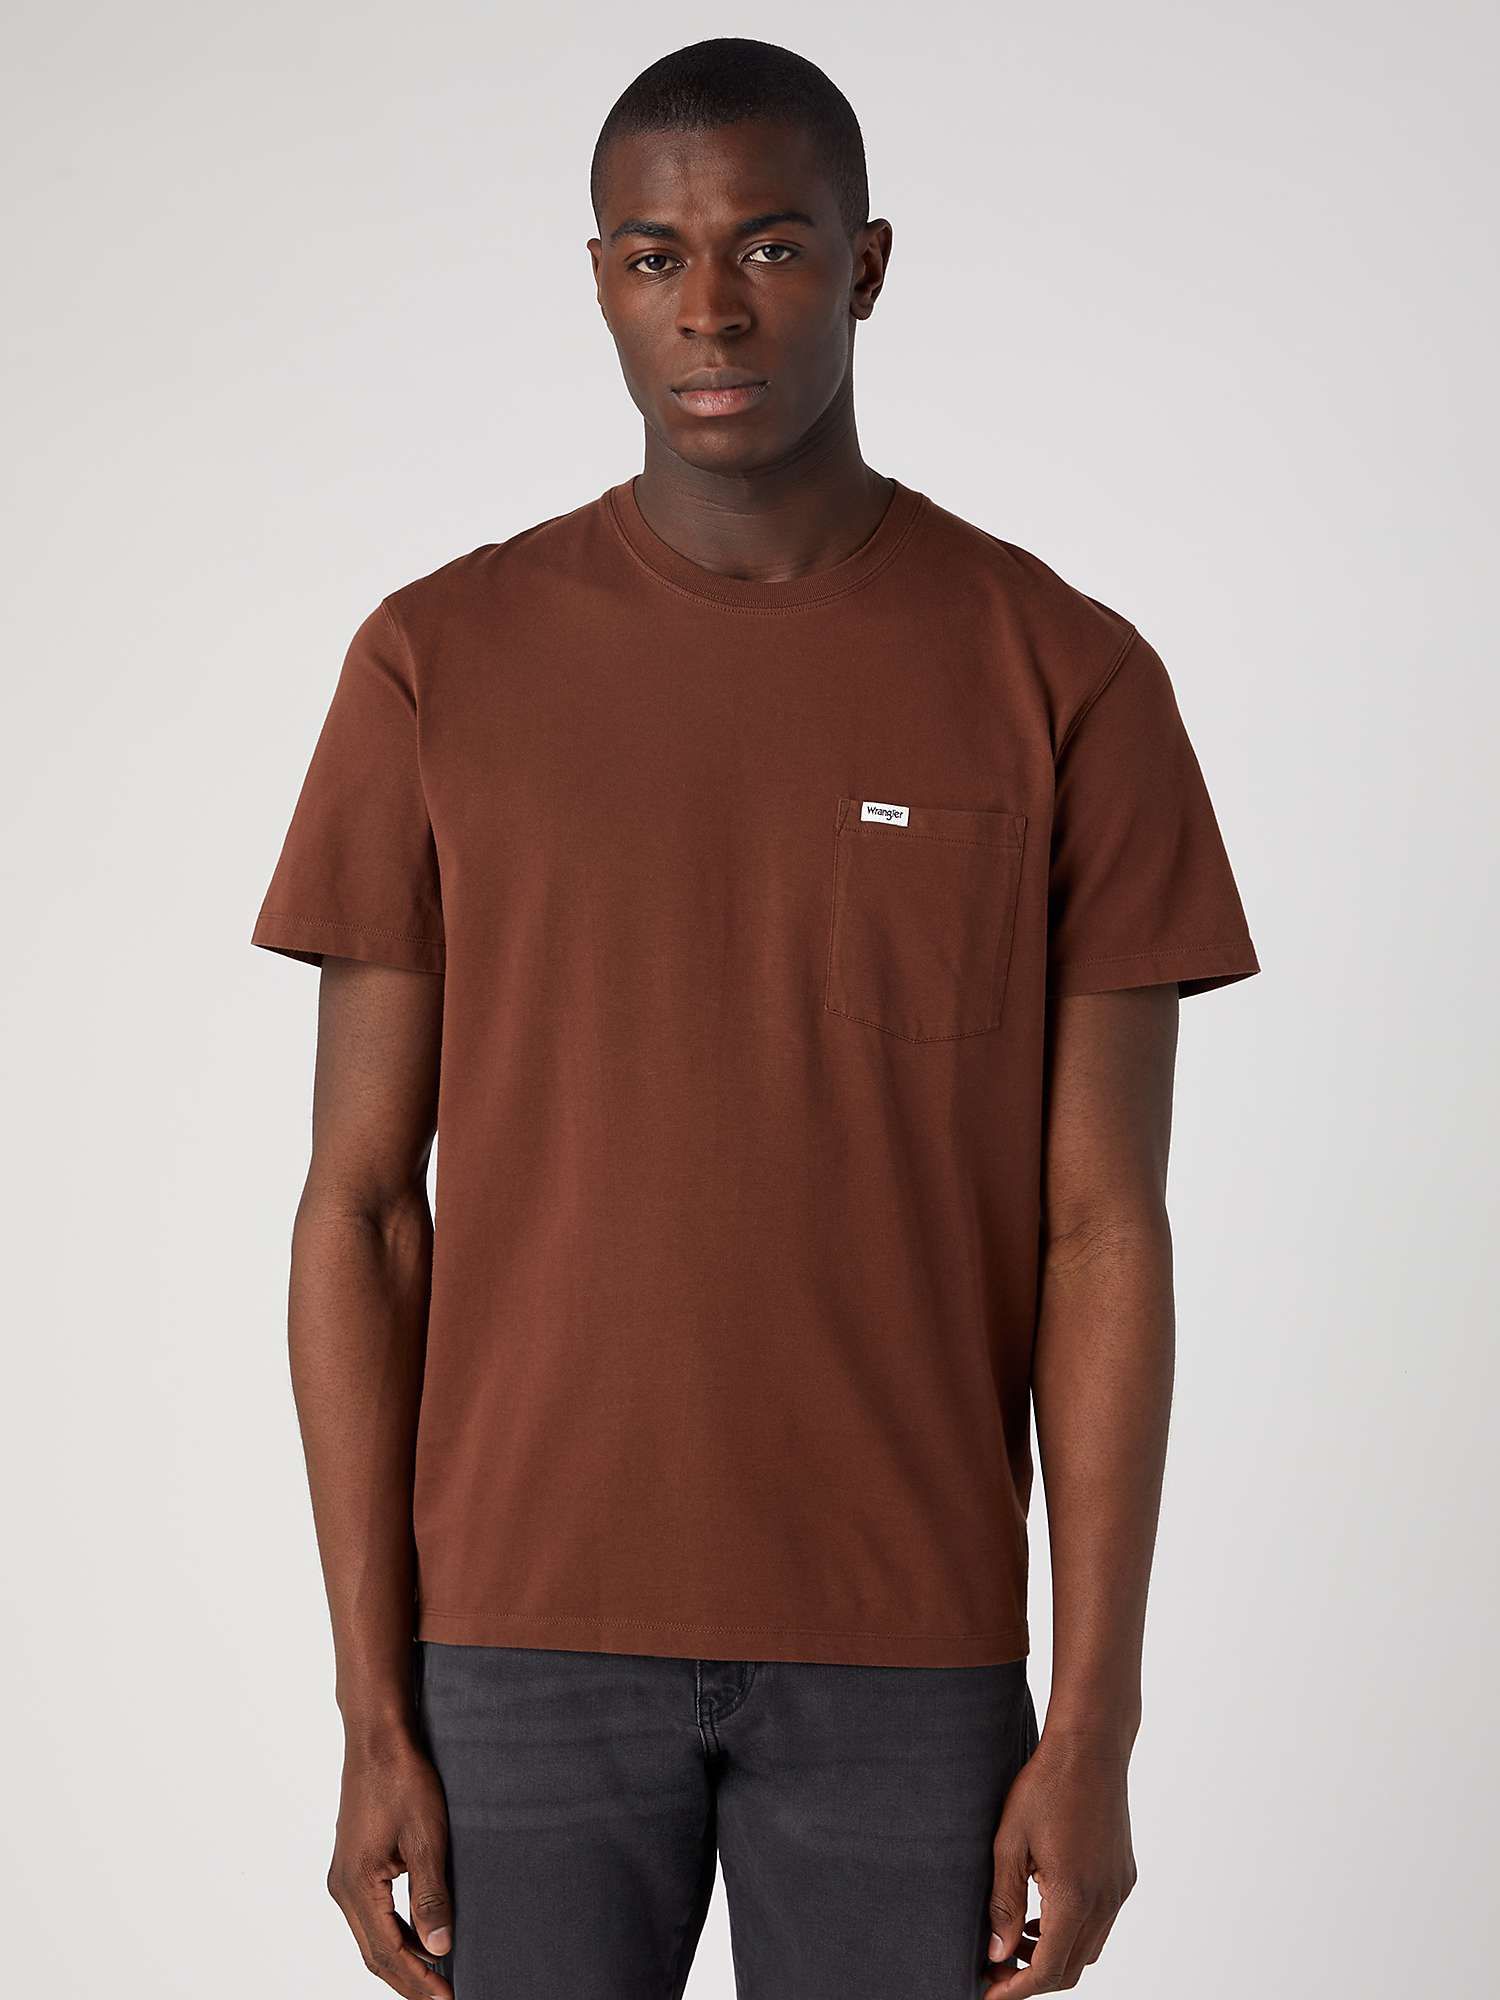 Wrangler Pocket T-Shirt, Brown at John Lewis & Partners